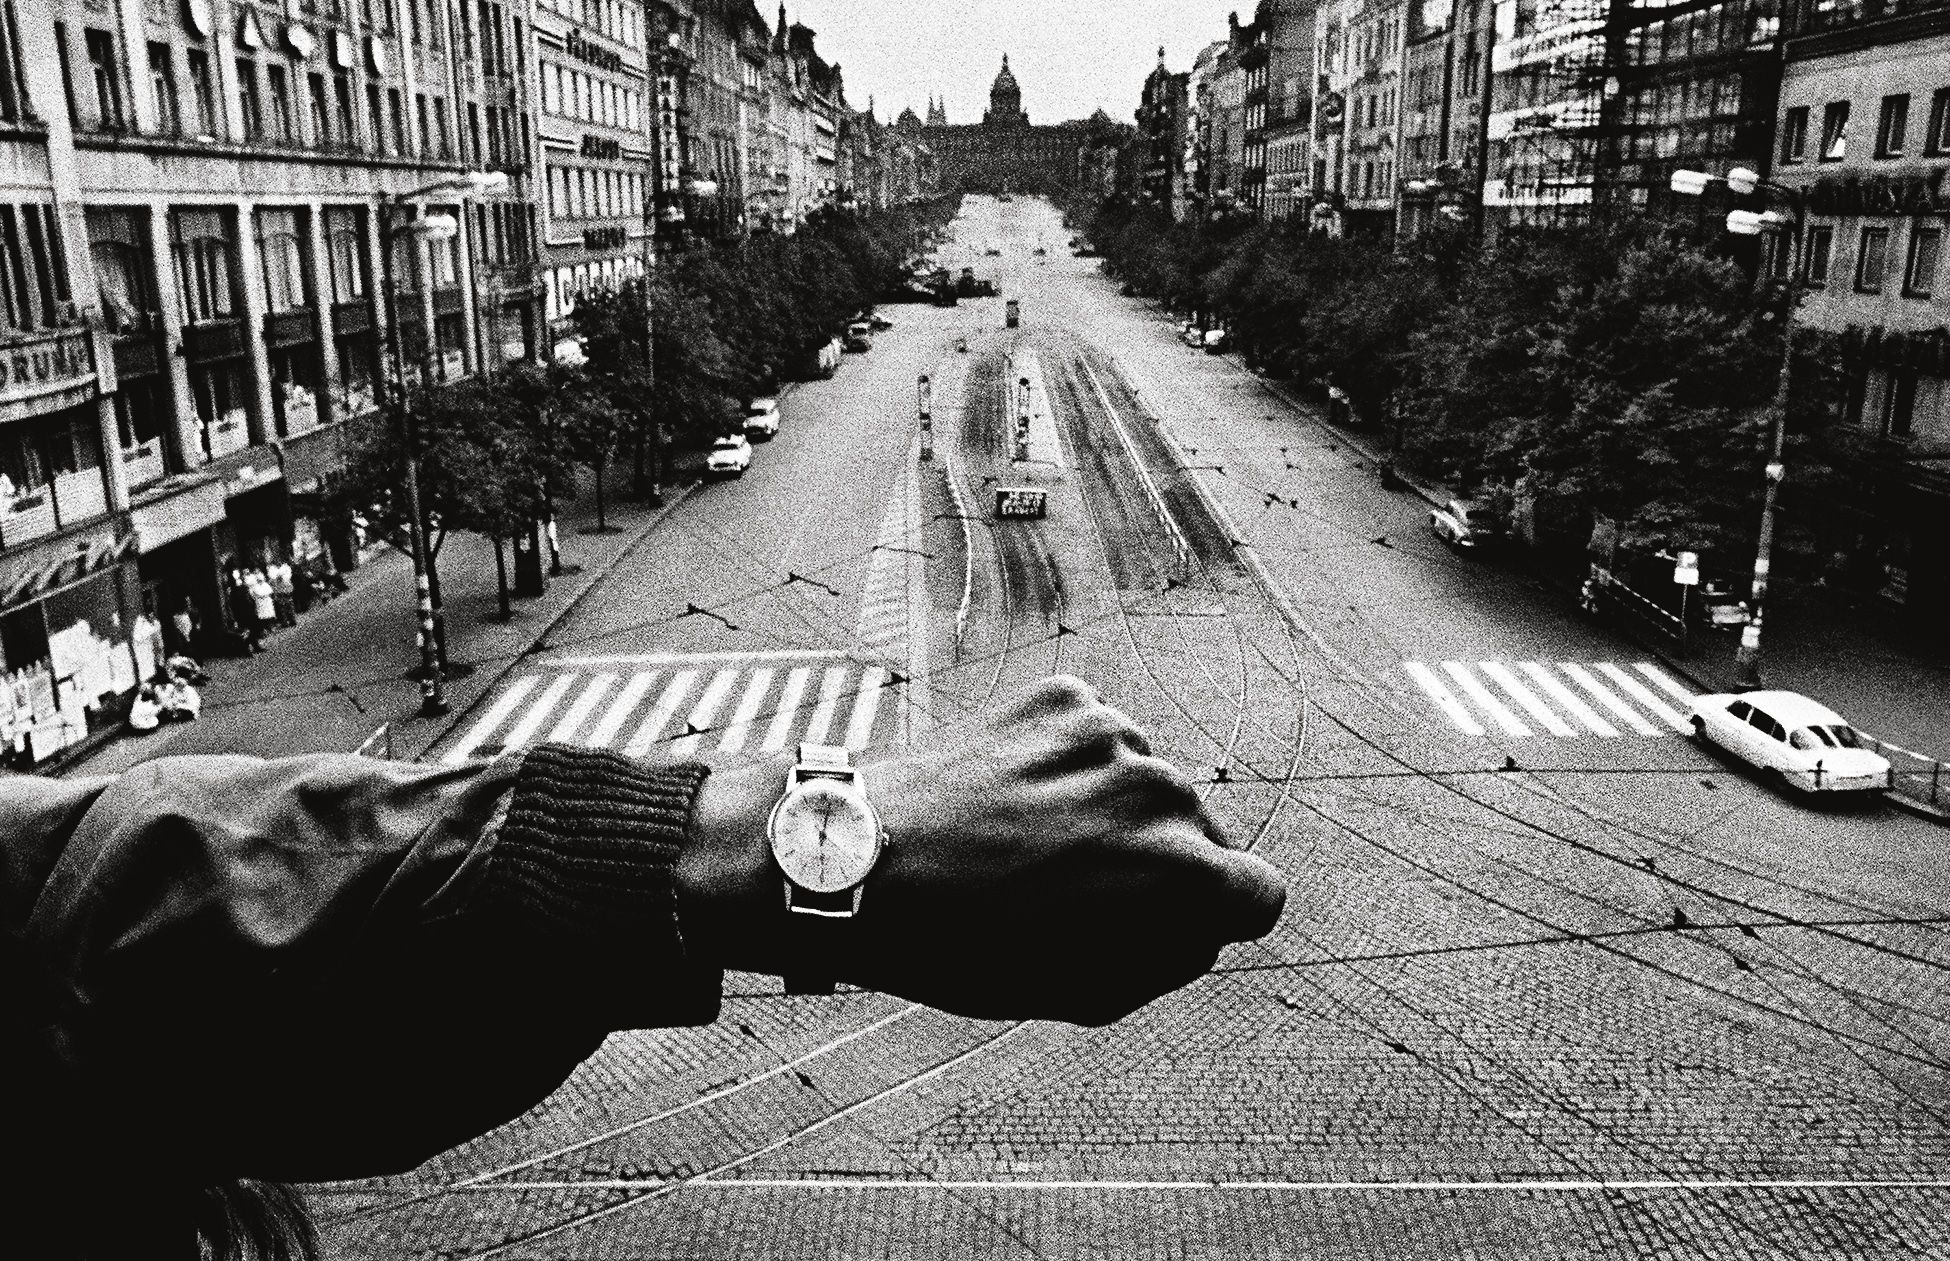 Koudelka: Invasion 1968 and Archival Footage by Jan Němec, Trade Fair Palace, Prague, 22 August 2018-6 January 2019